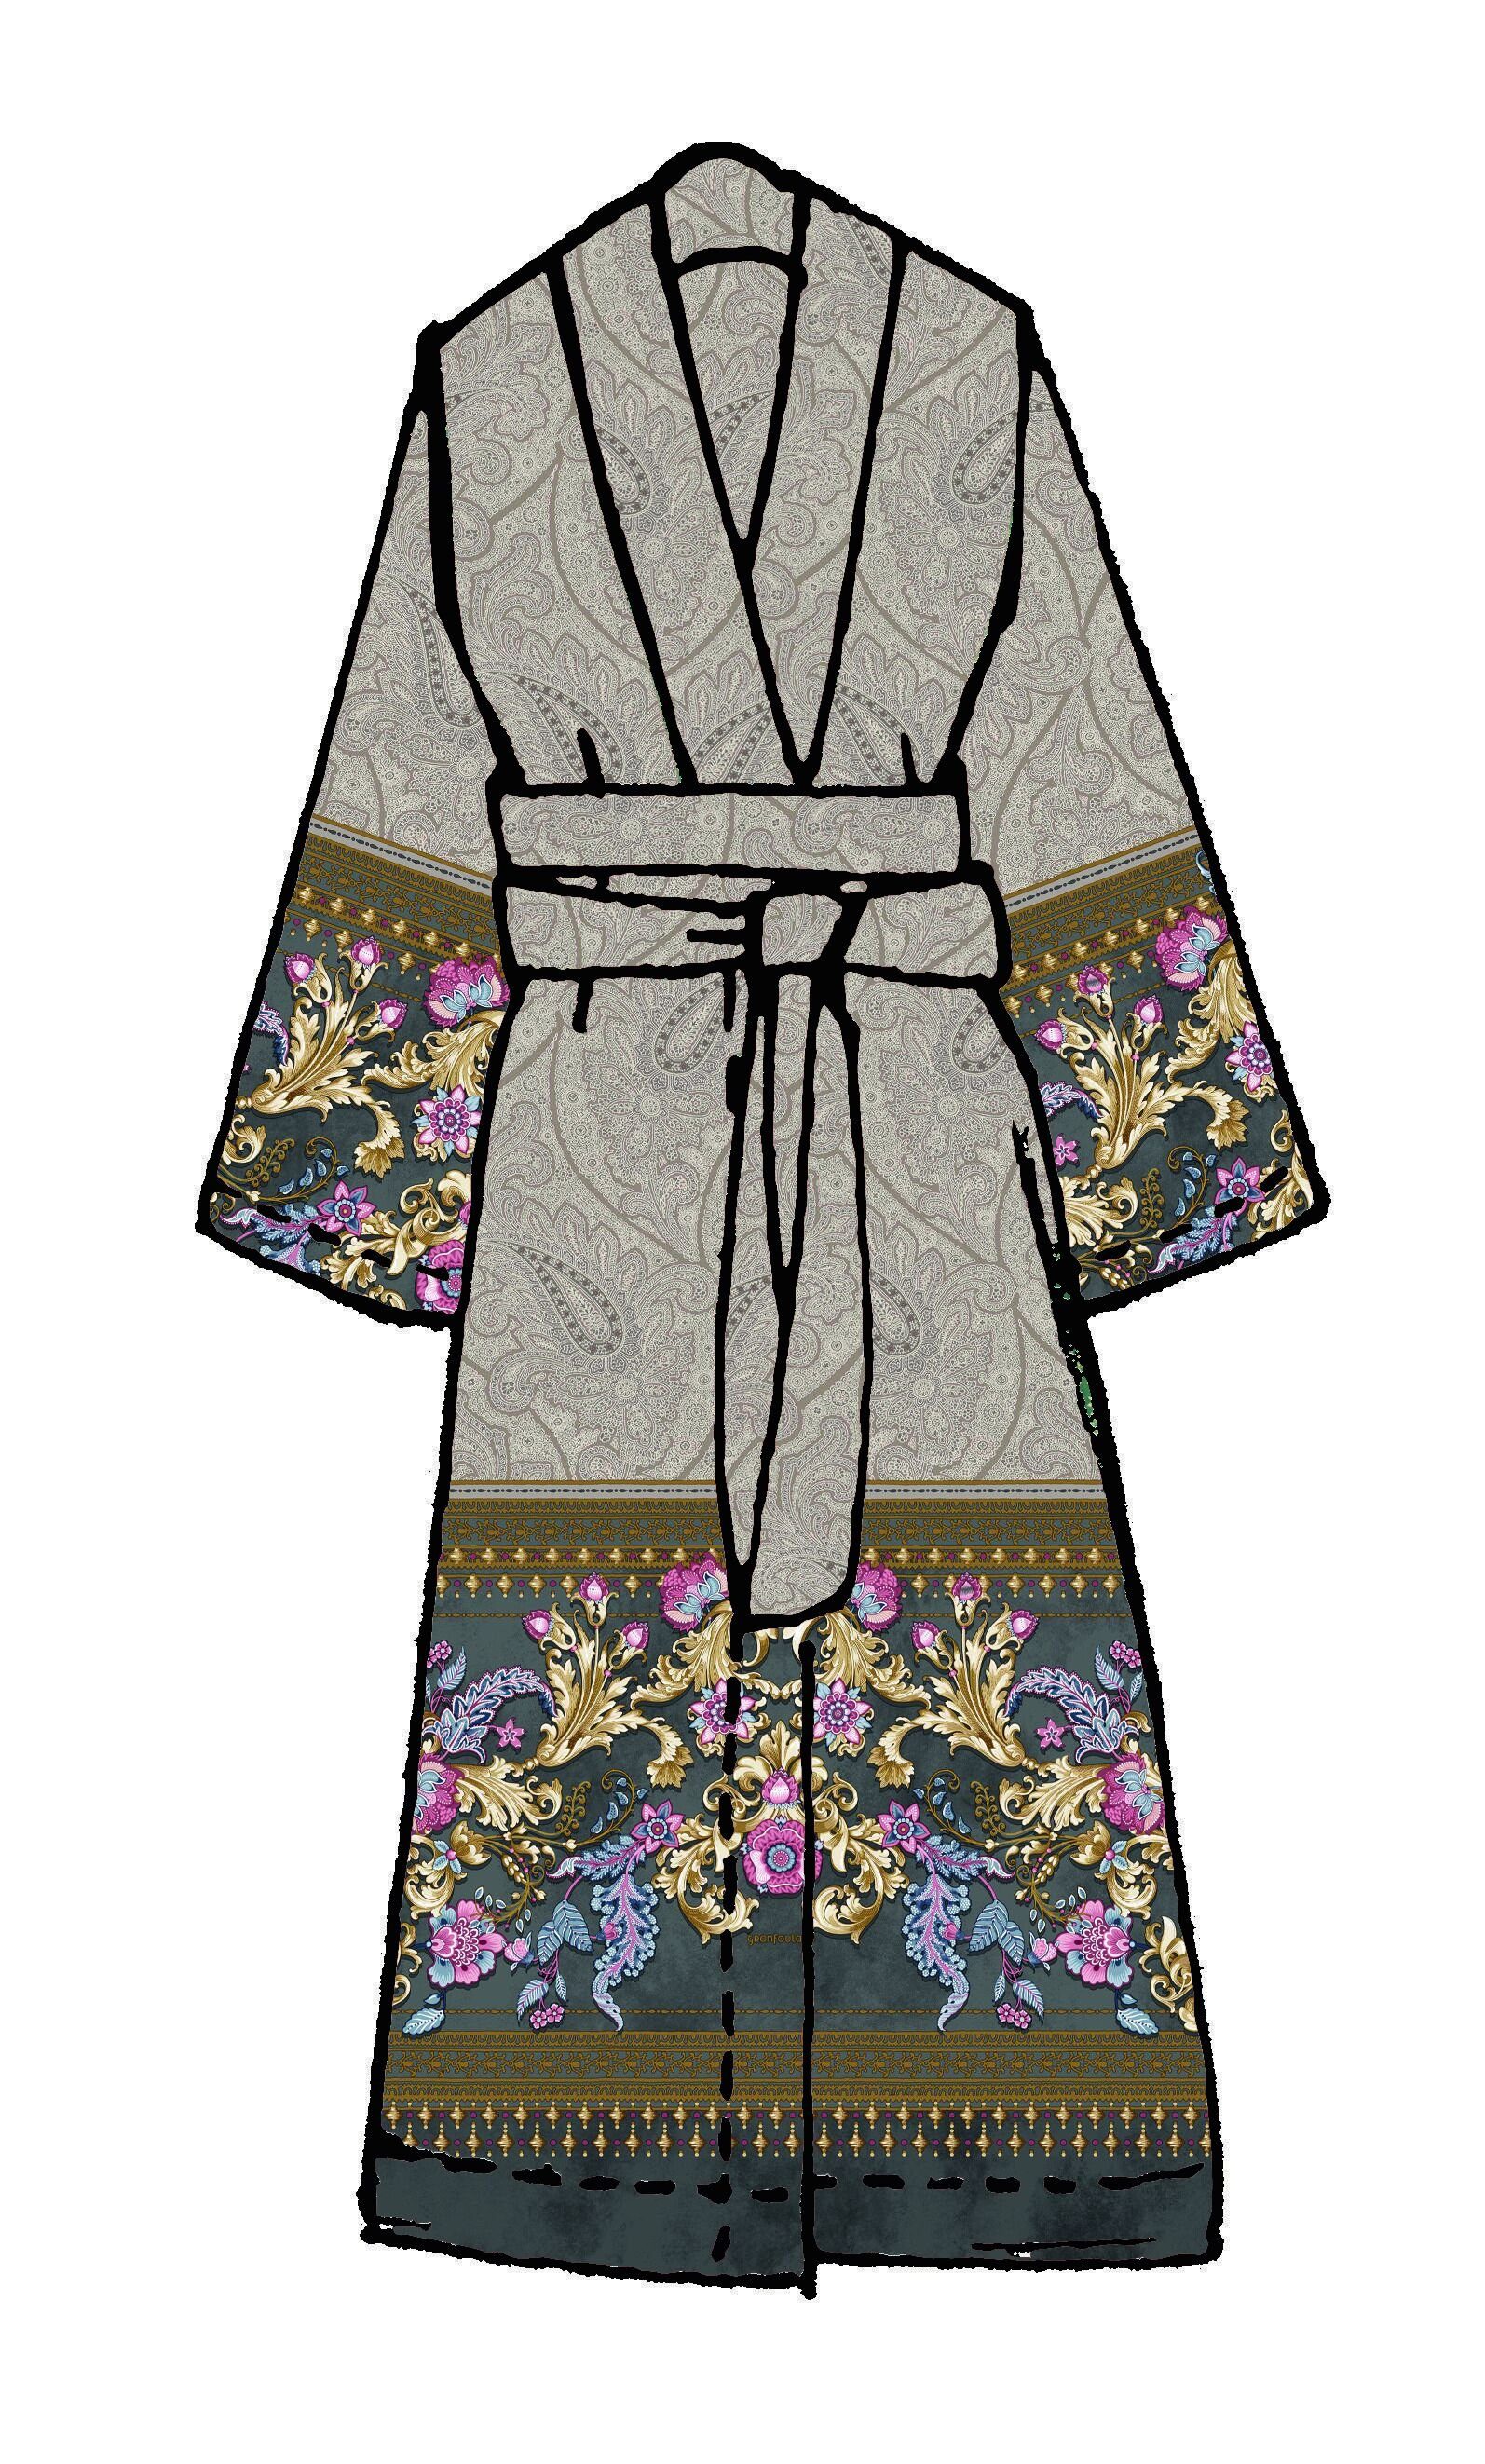 wadenlang, GRAU TUSCANIA, Kimono Gürtel Baumwolle, Bassetti